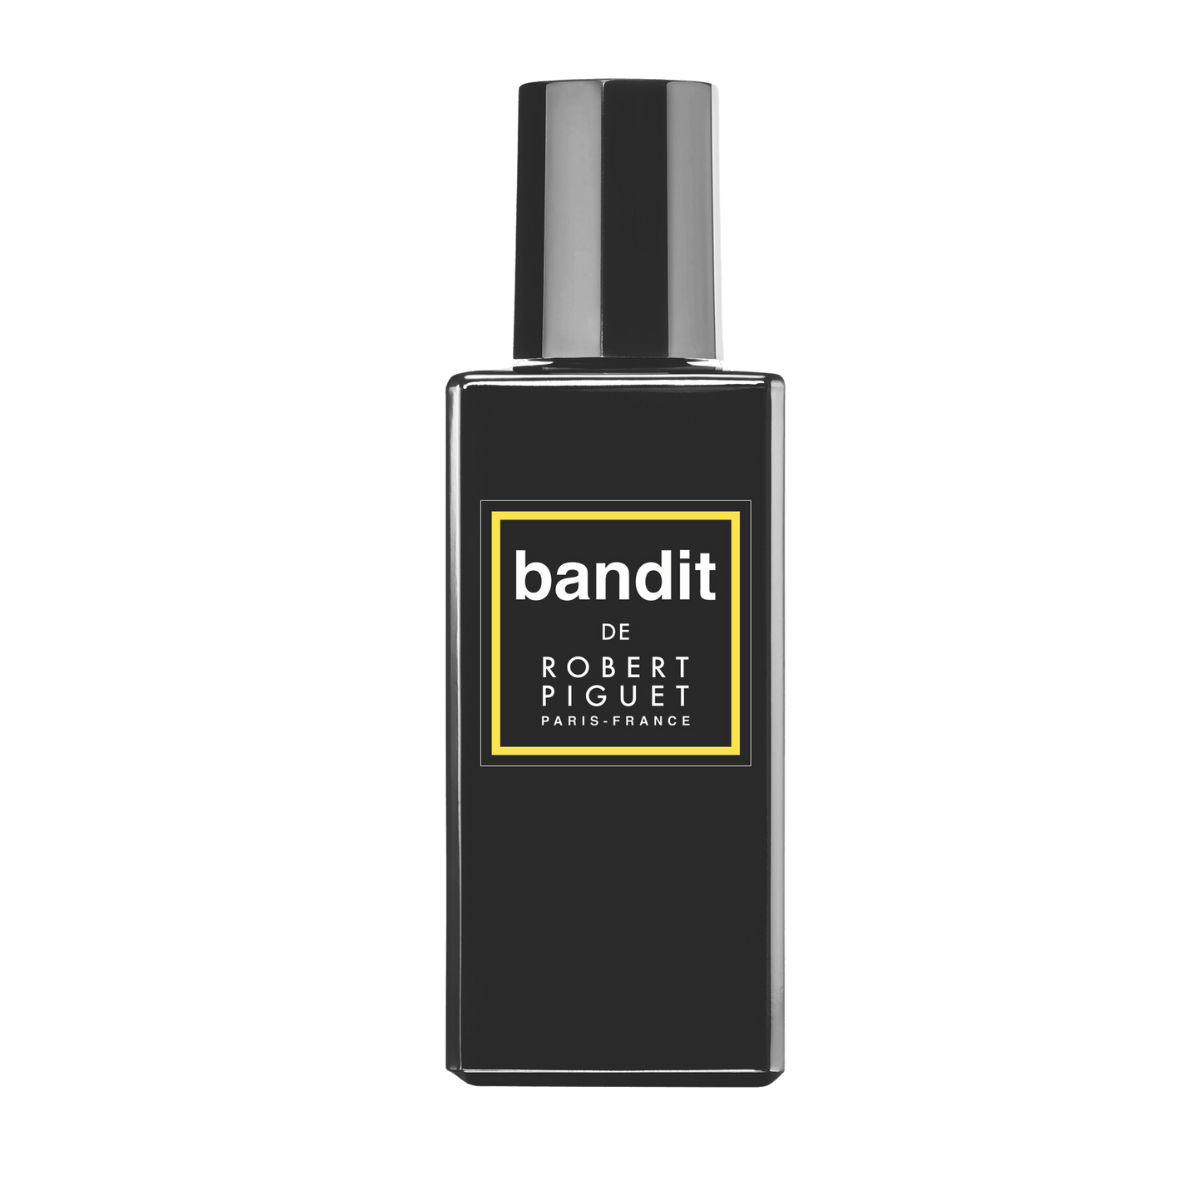 Image of Bandit eau de parfum 100 ml by the perfume brand Robert Piguet